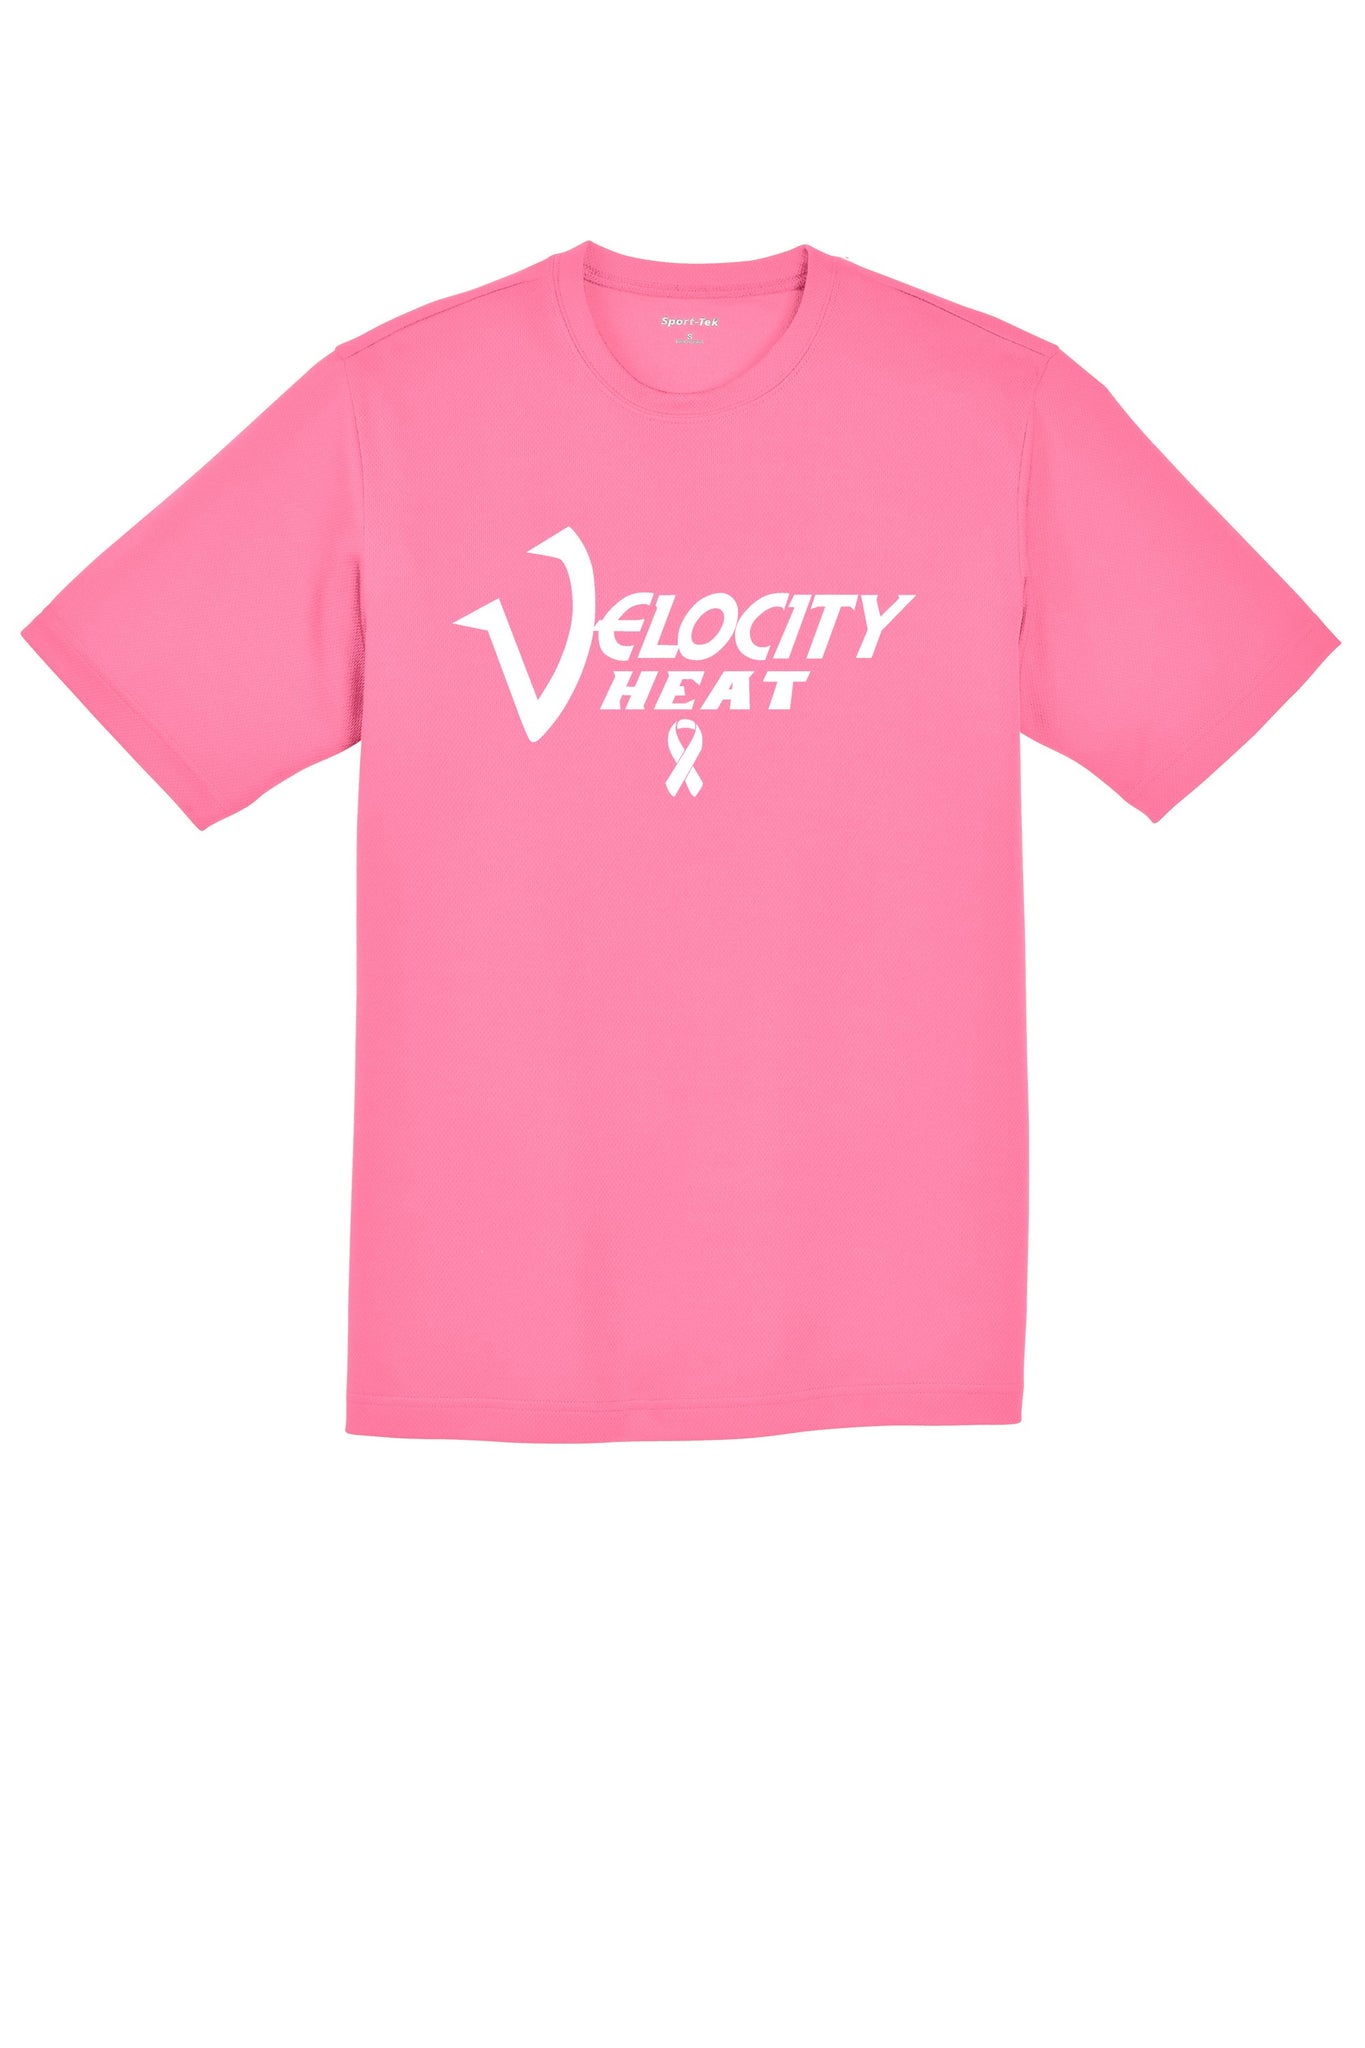 Velocity Heat Men's Breast Cancer Shirt